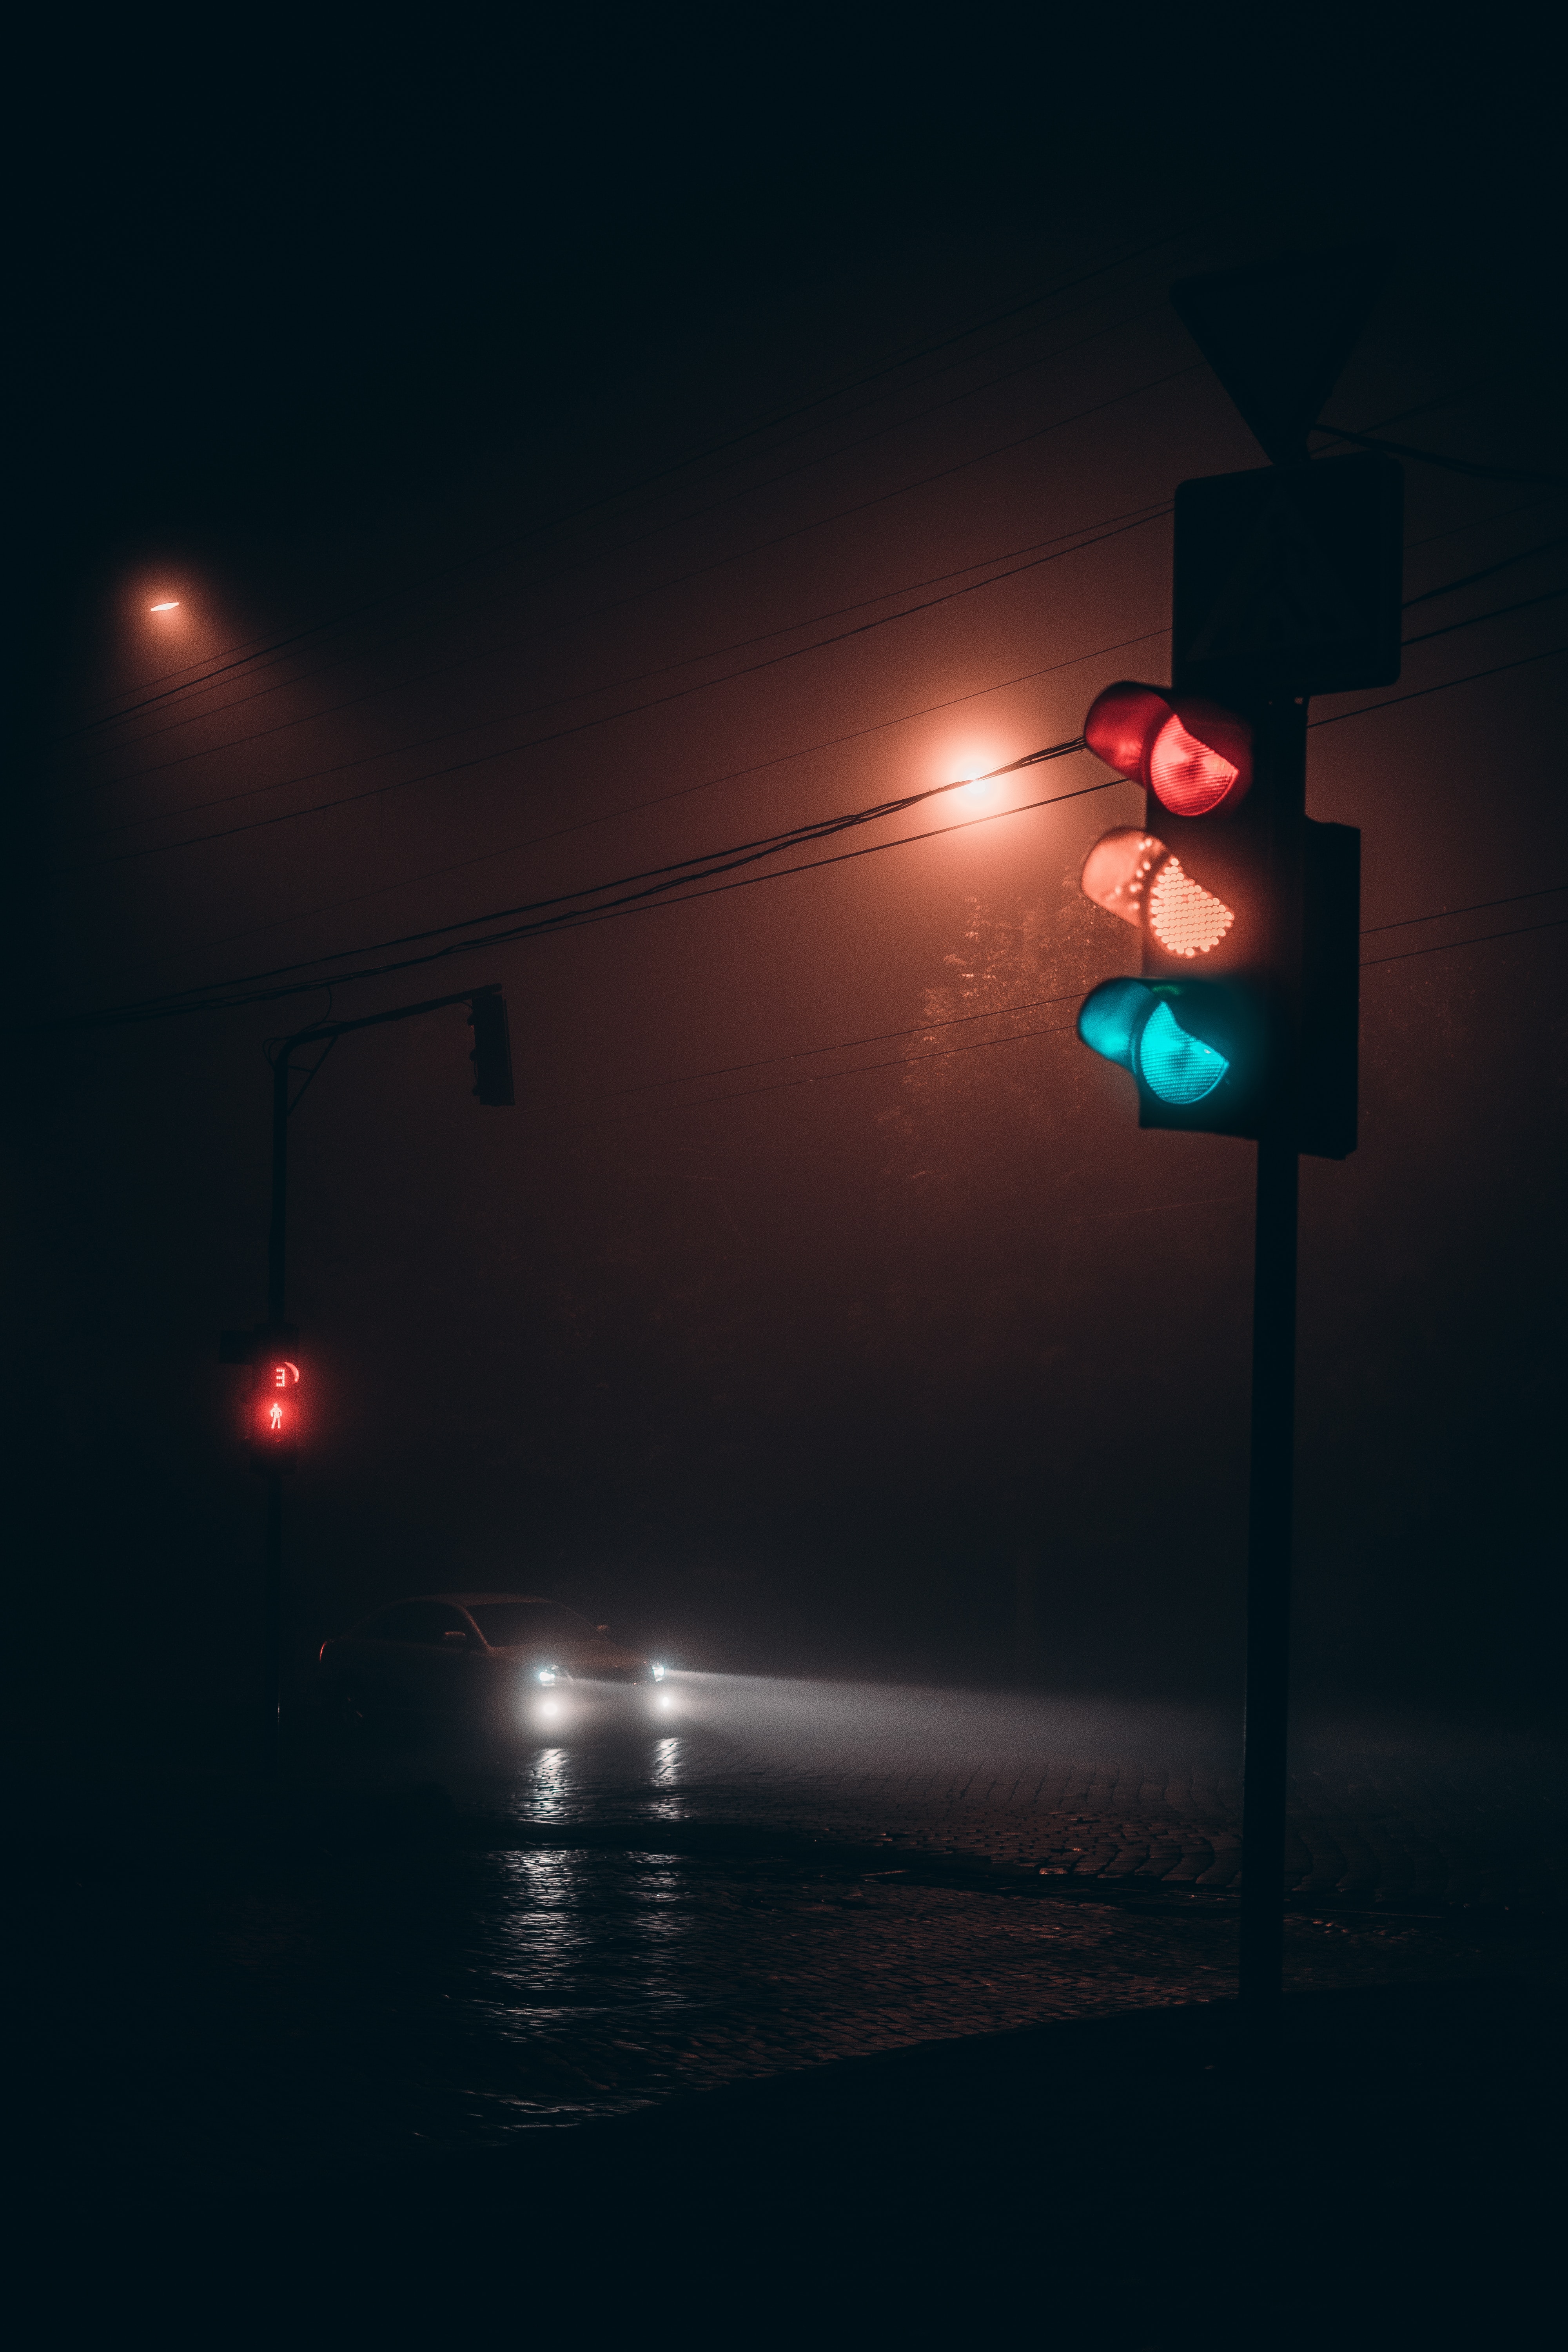 Download background dark, machine, cities, night, road, fog, car, traffic light